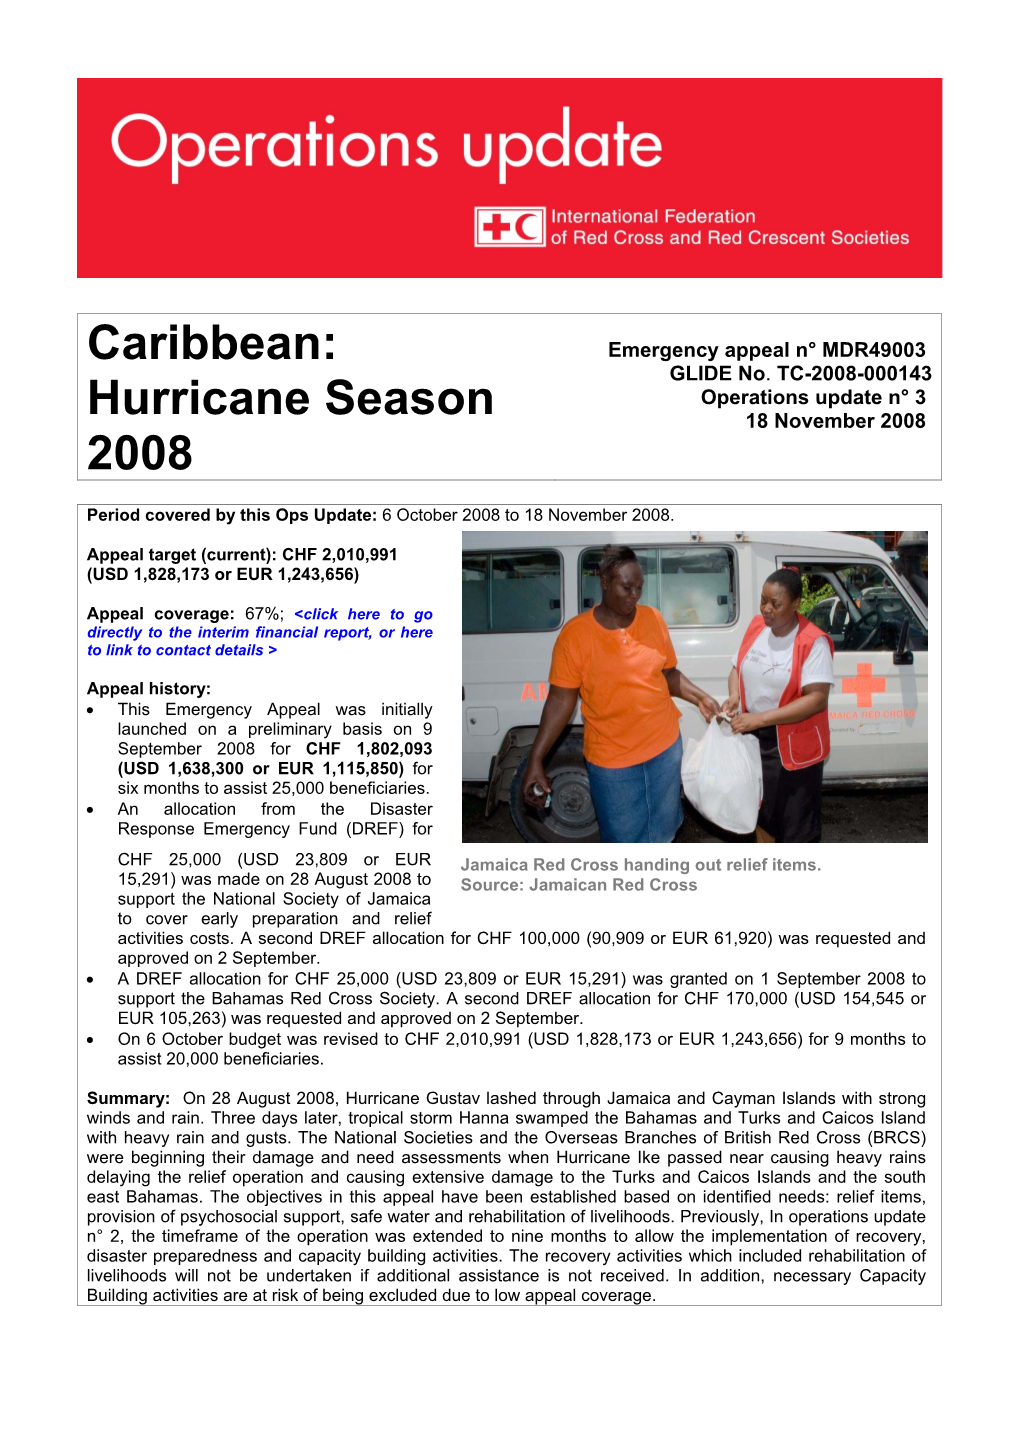 Caribbean: Hurricane Season 2008